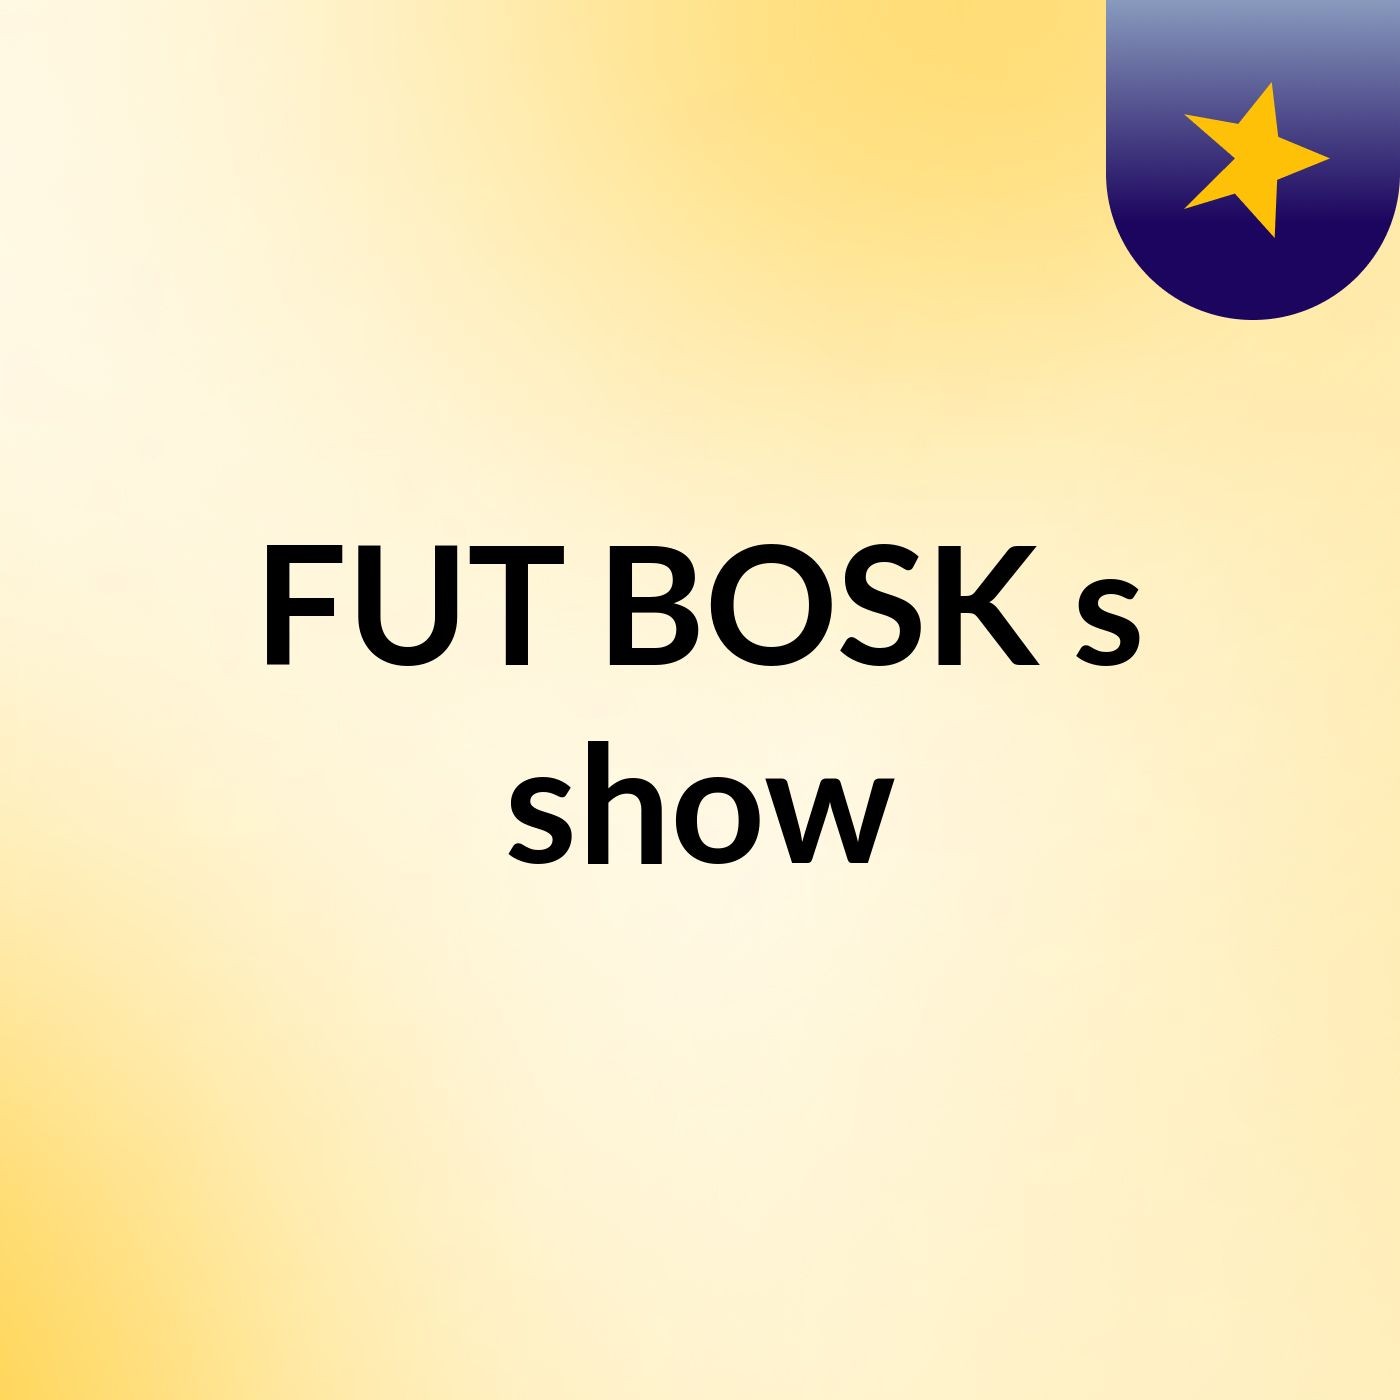 FUT BOSK's show